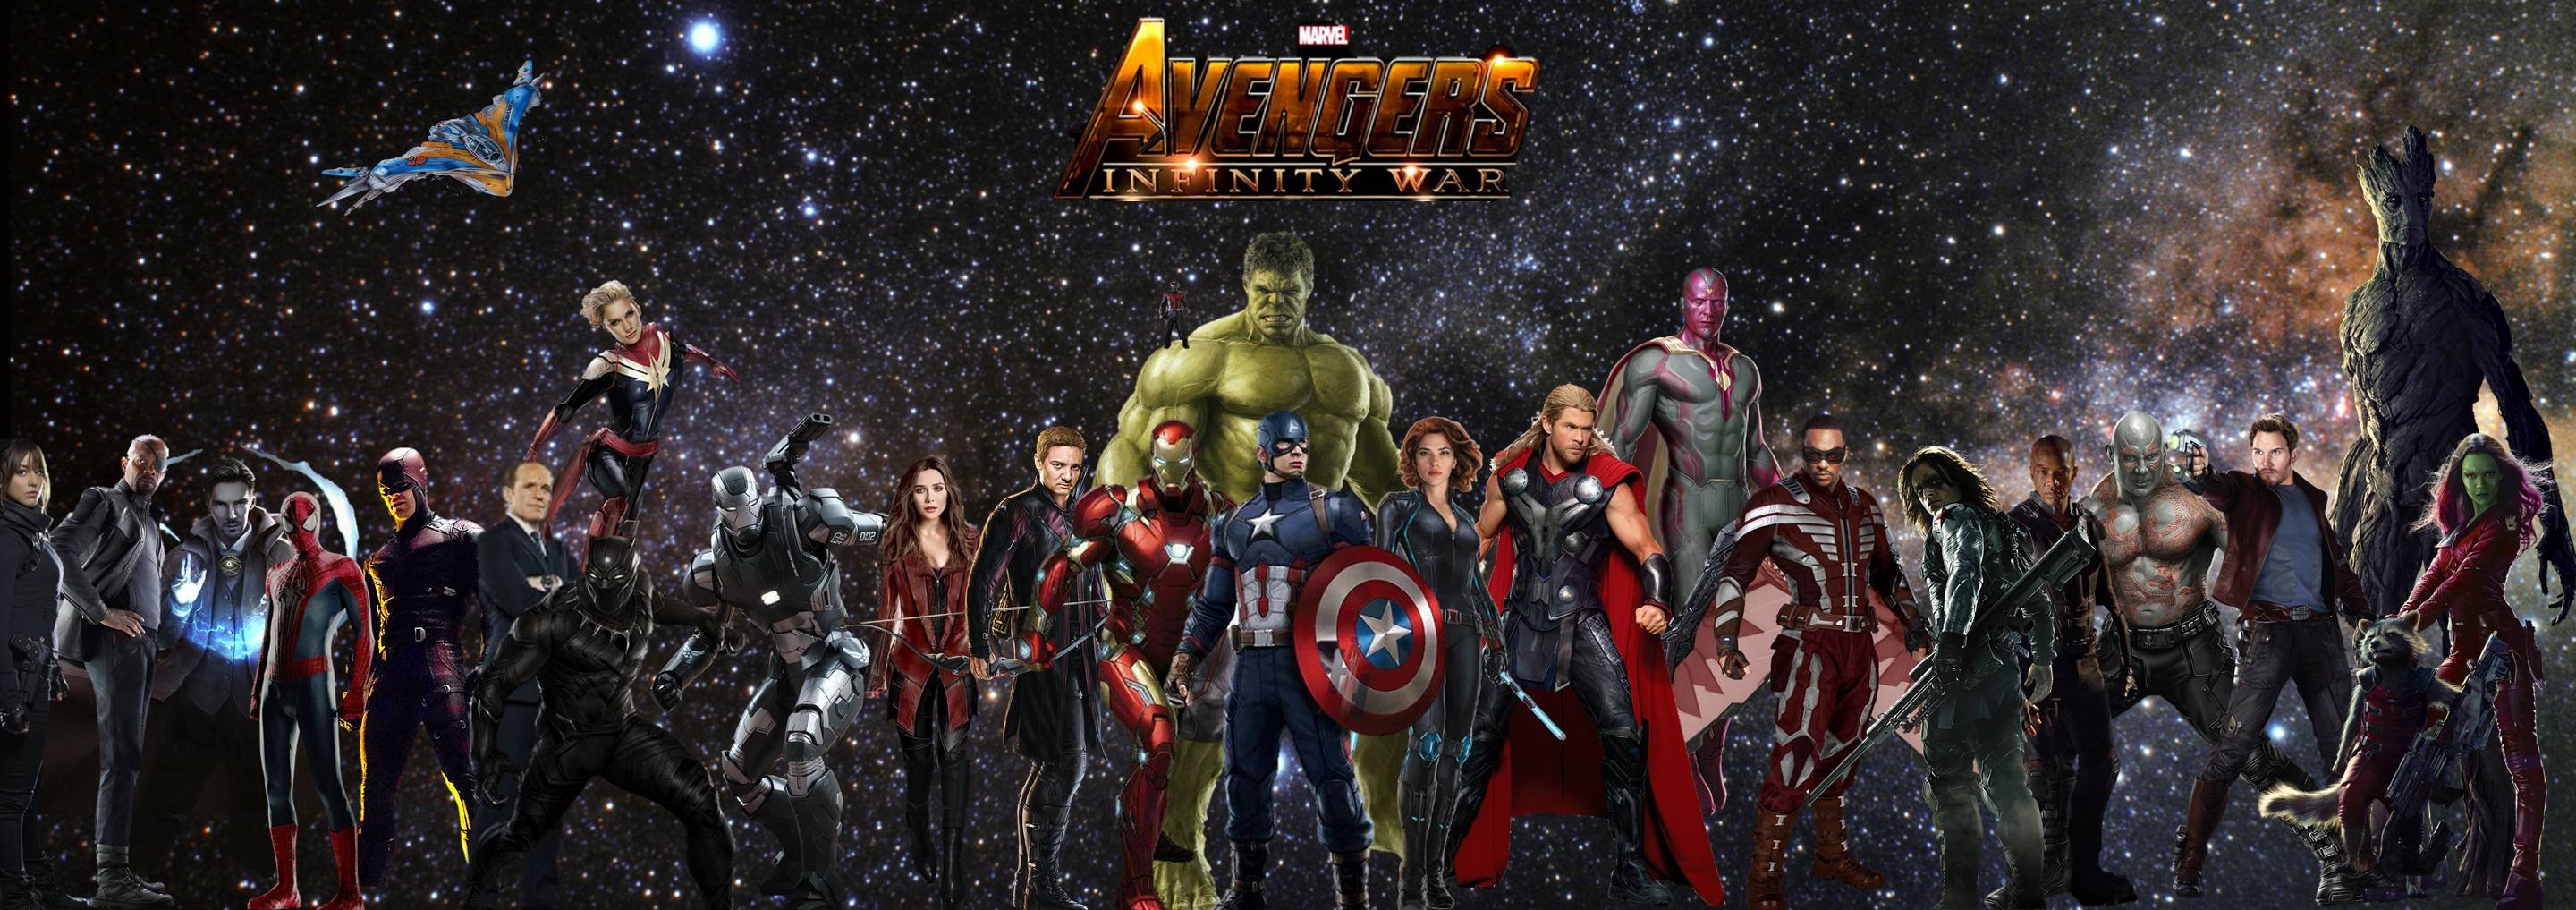 avengers infinity war movie online free